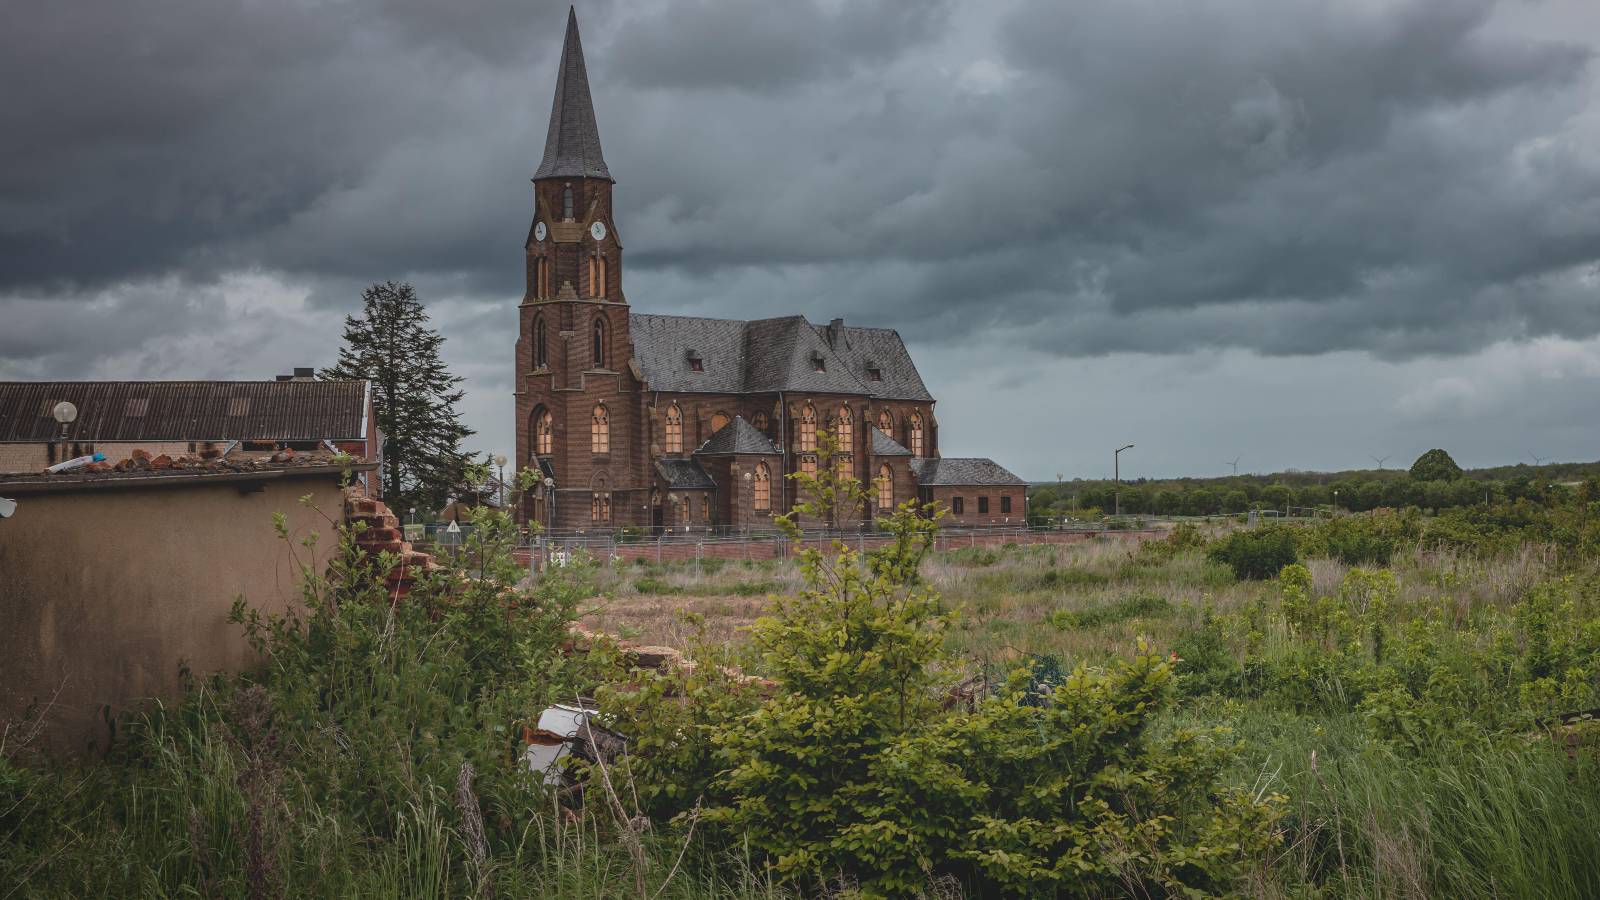 Abandoned Kerpen-Manheim church, town where Michael Schumacher grew up. Germany, May 2021.